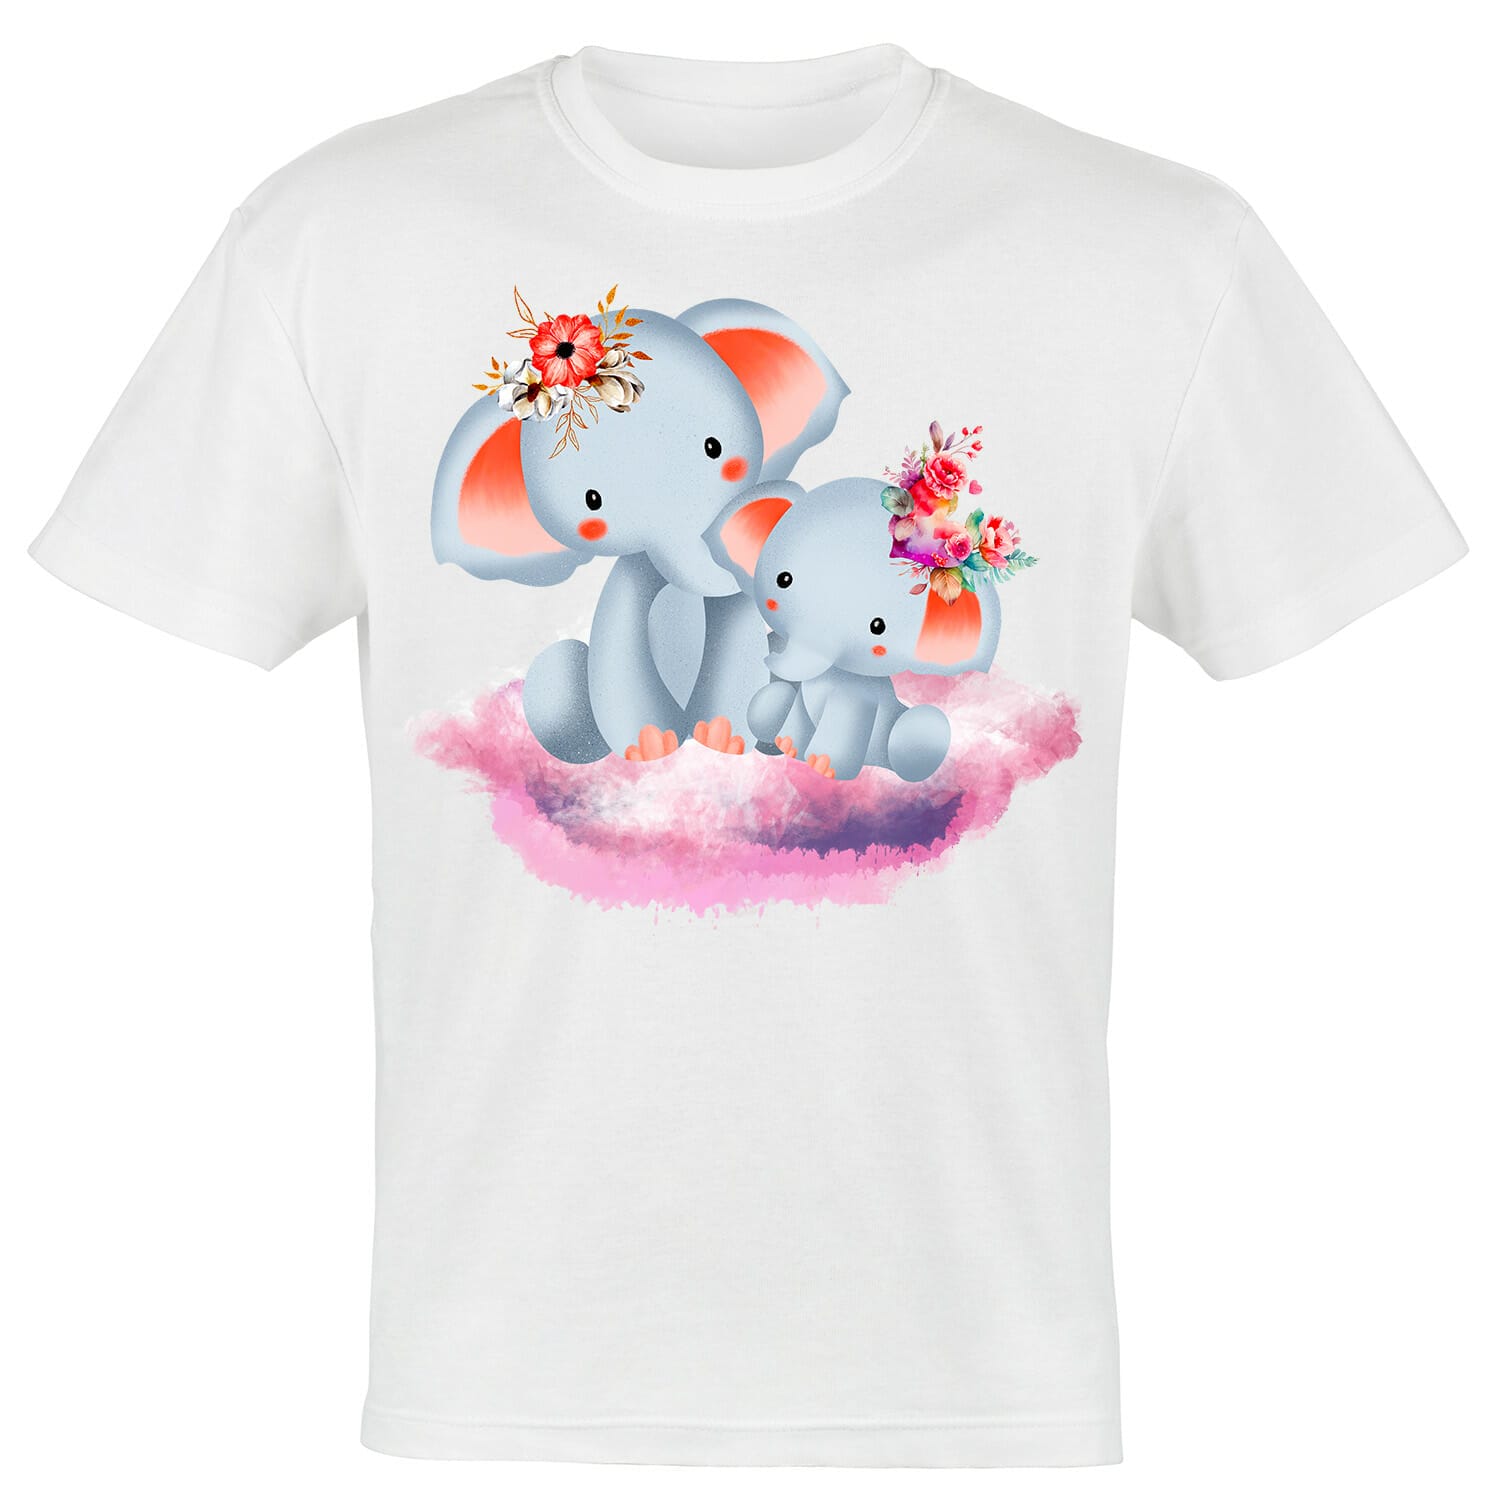 mom and baby elephant tshirt design